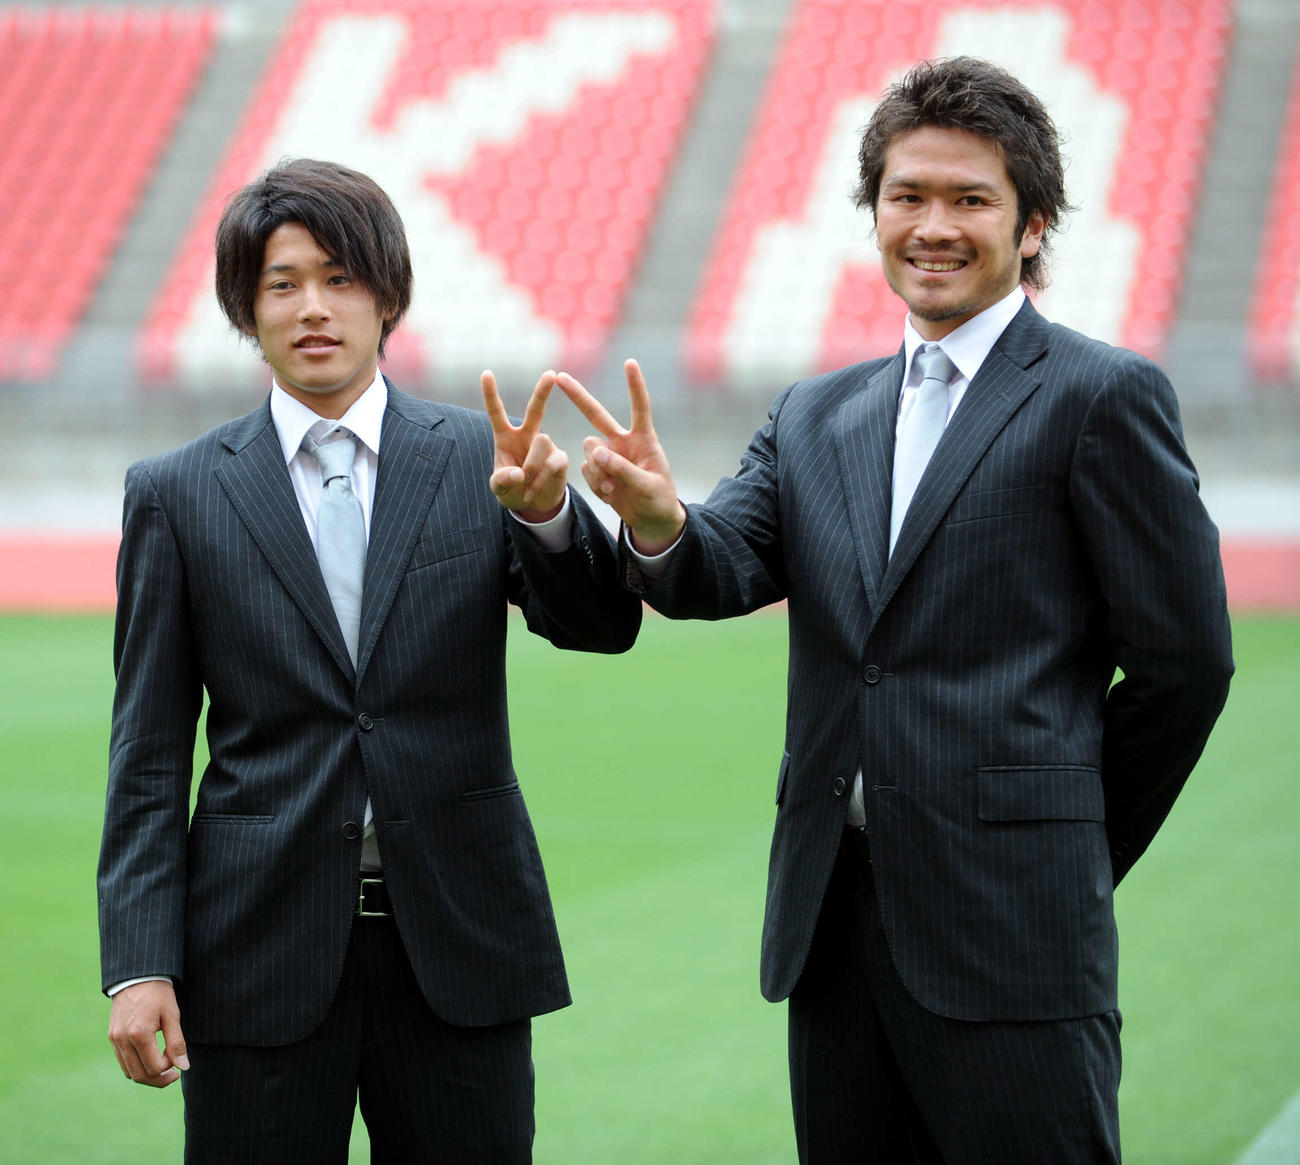 W杯南アフリカ大会日本代表選手選出された鹿島の内田篤人(左)と岩政大樹は、Wのマークを作り笑顔を見せる（2010年5月10日撮影）